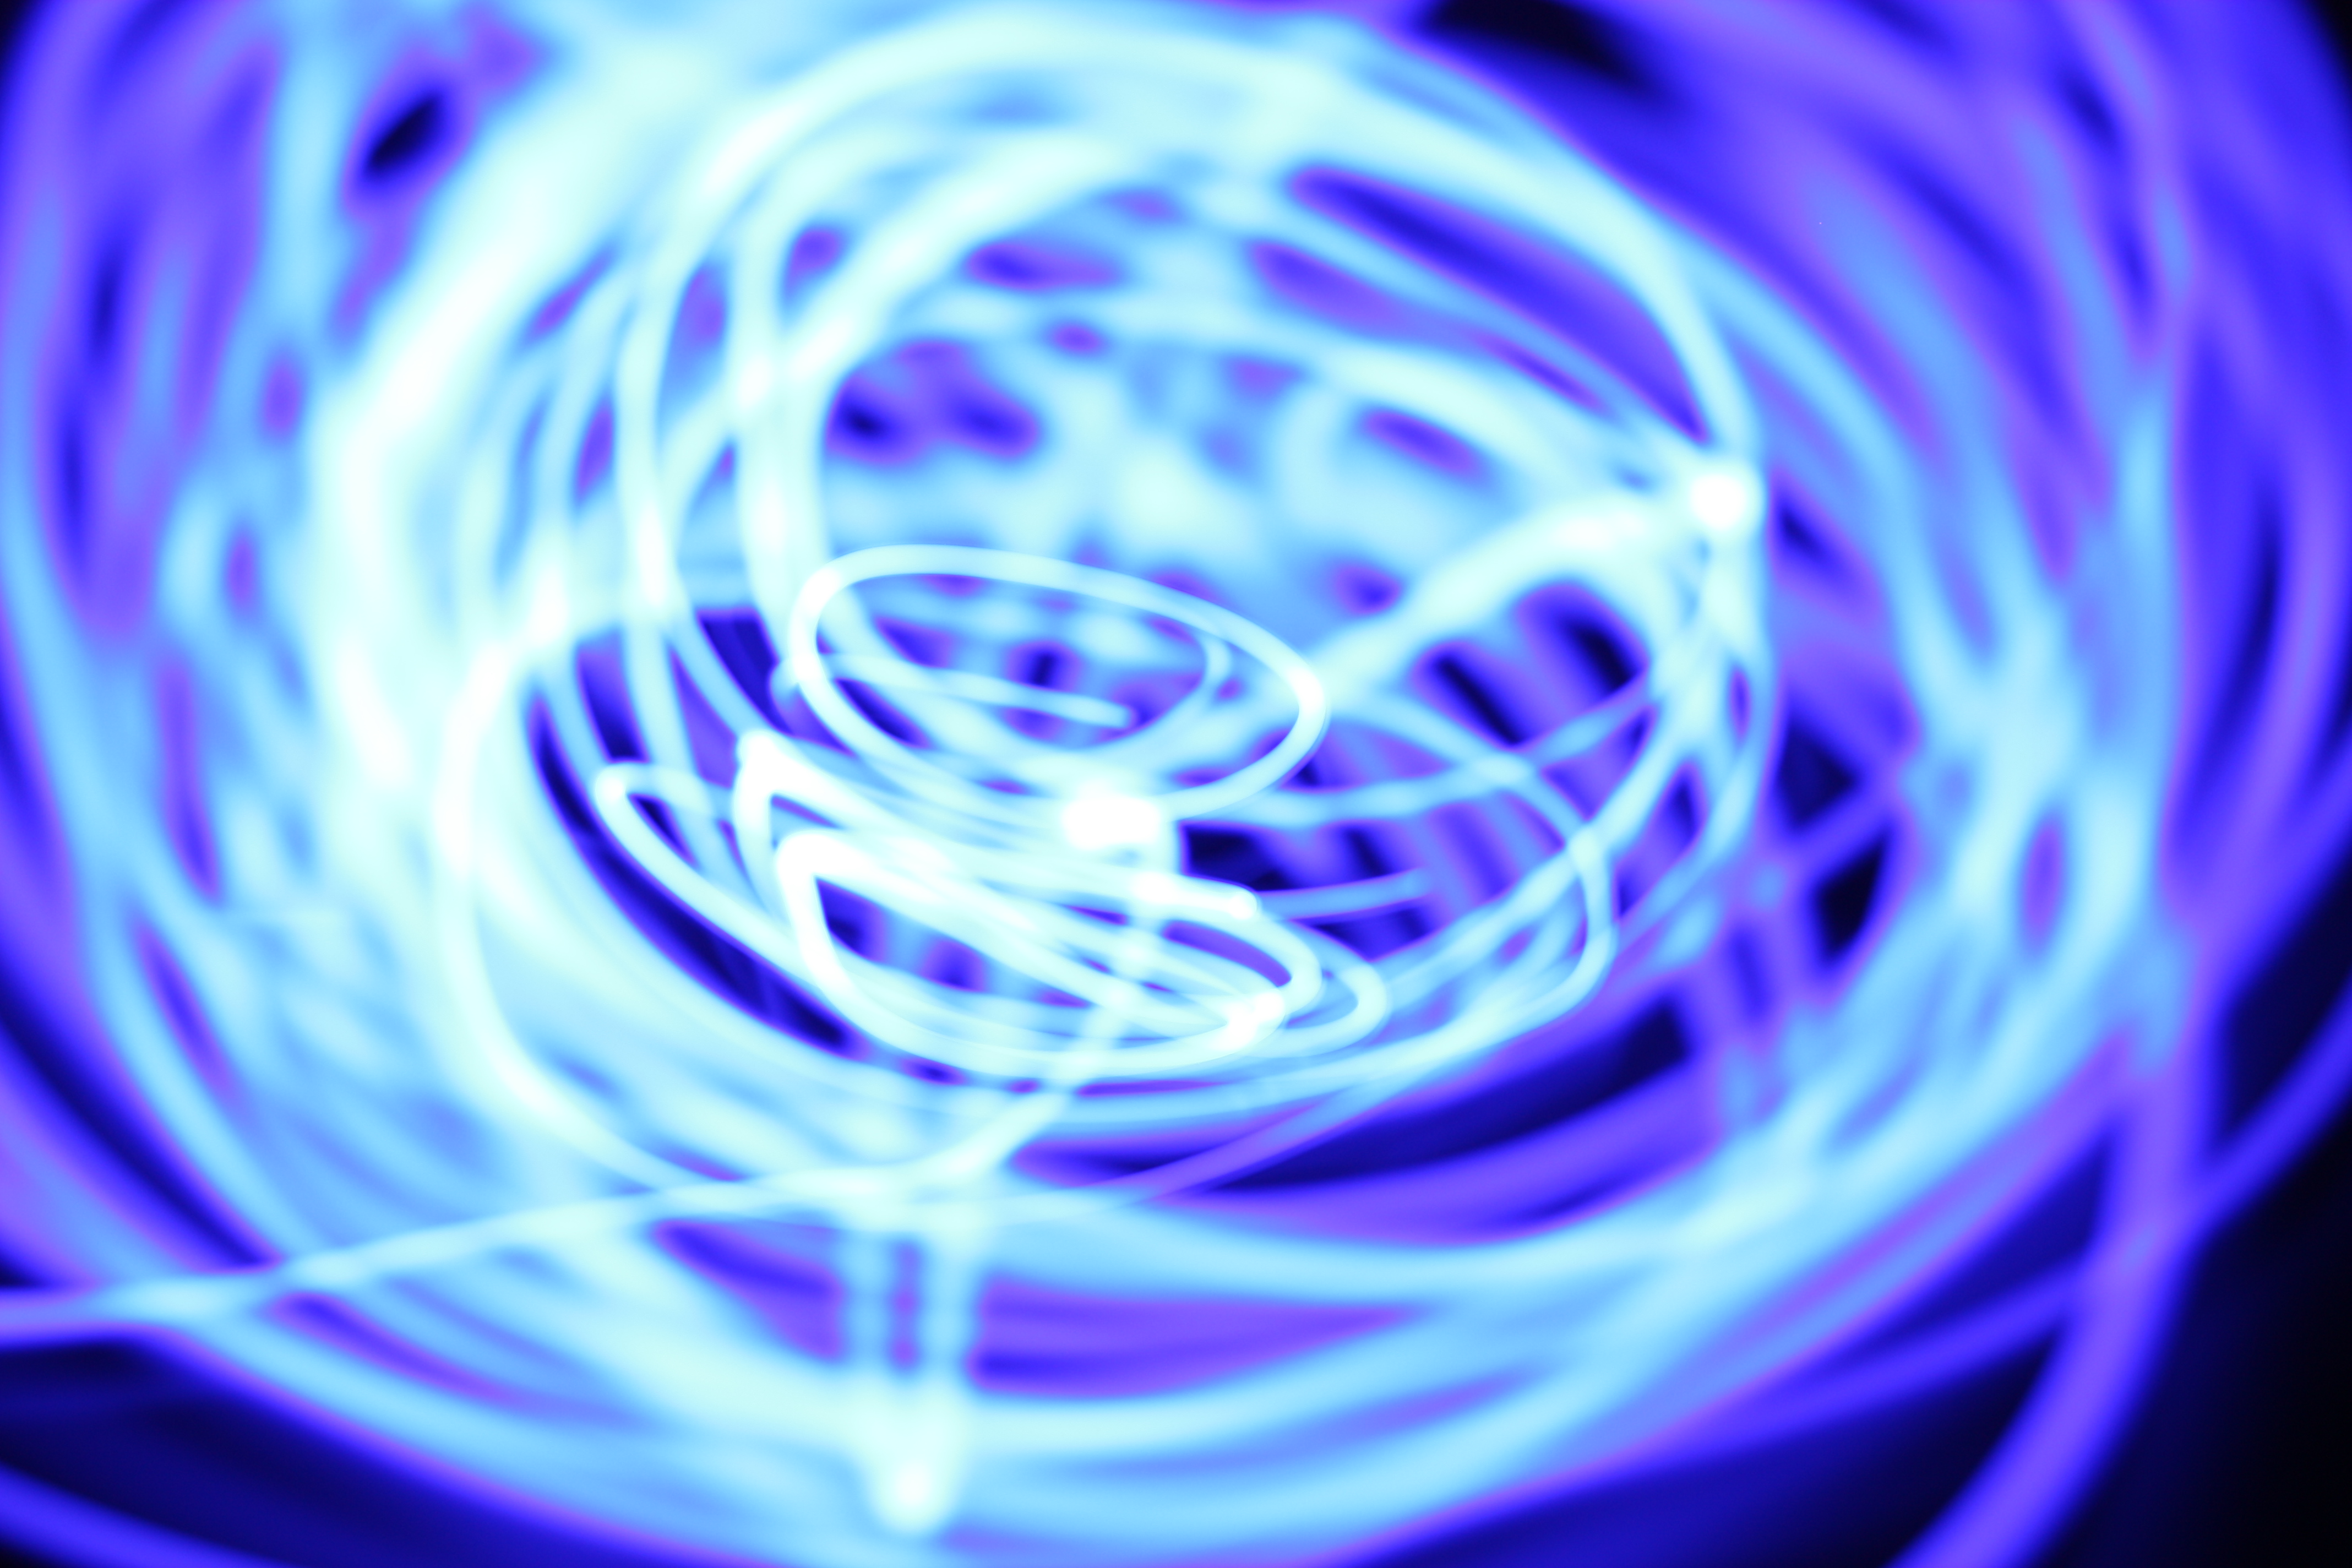 File:Blue Swirl (2480827036).jpg - Wikimedia Commons